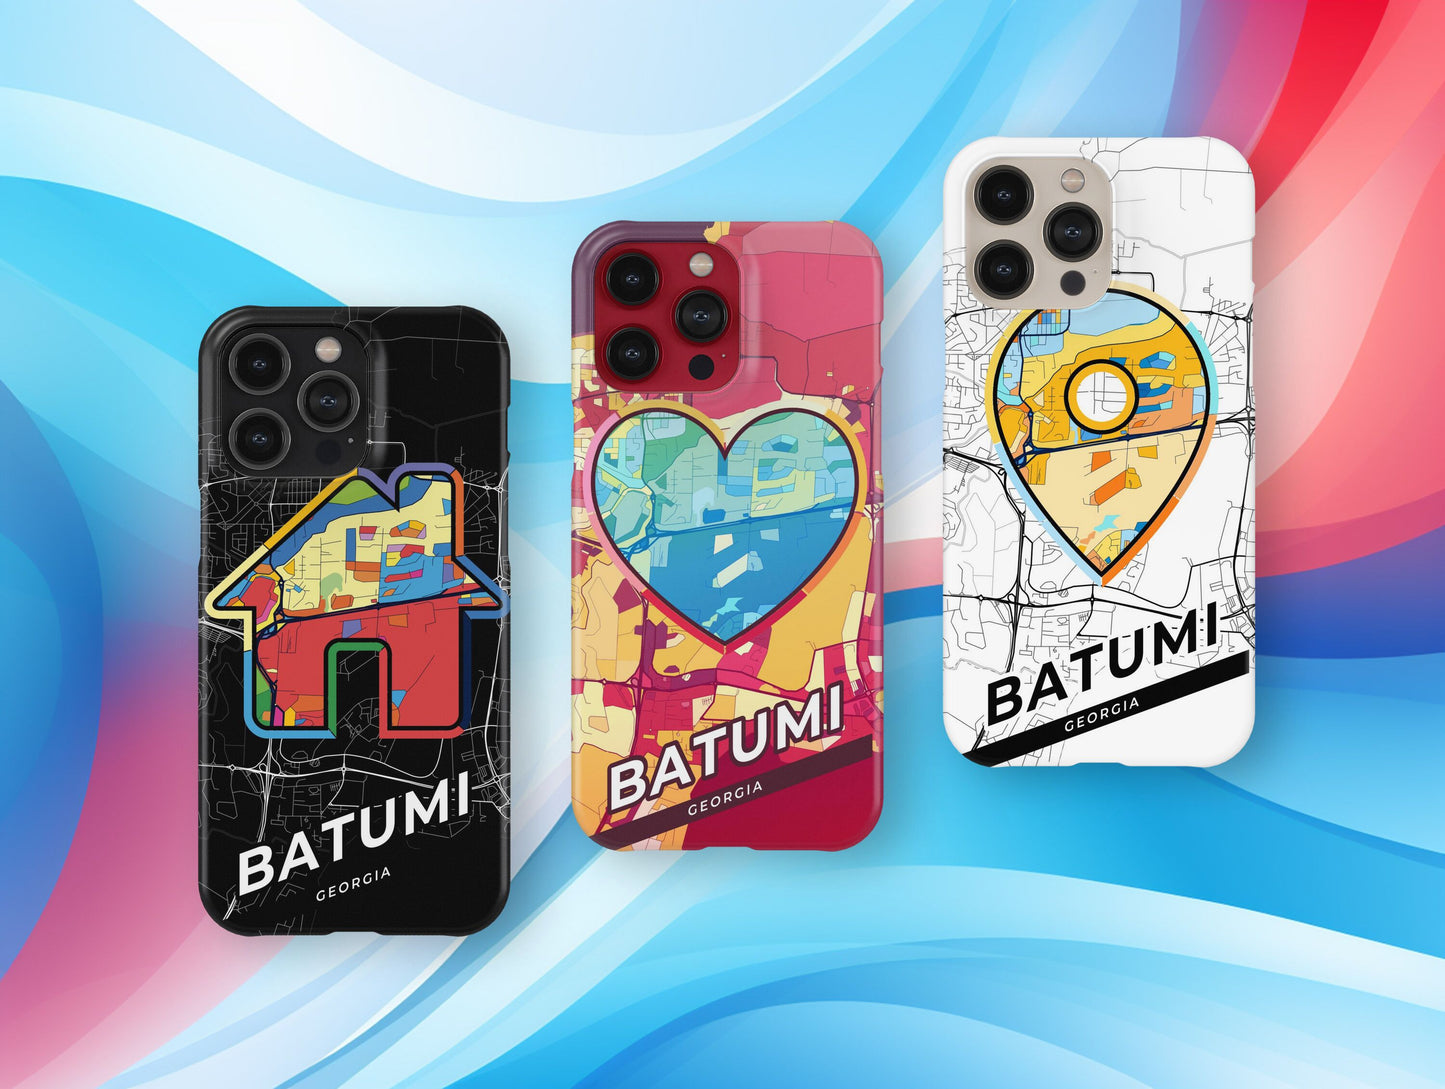 Batumi Georgia slim phone case with colorful icon. Birthday, wedding or housewarming gift. Couple match cases.